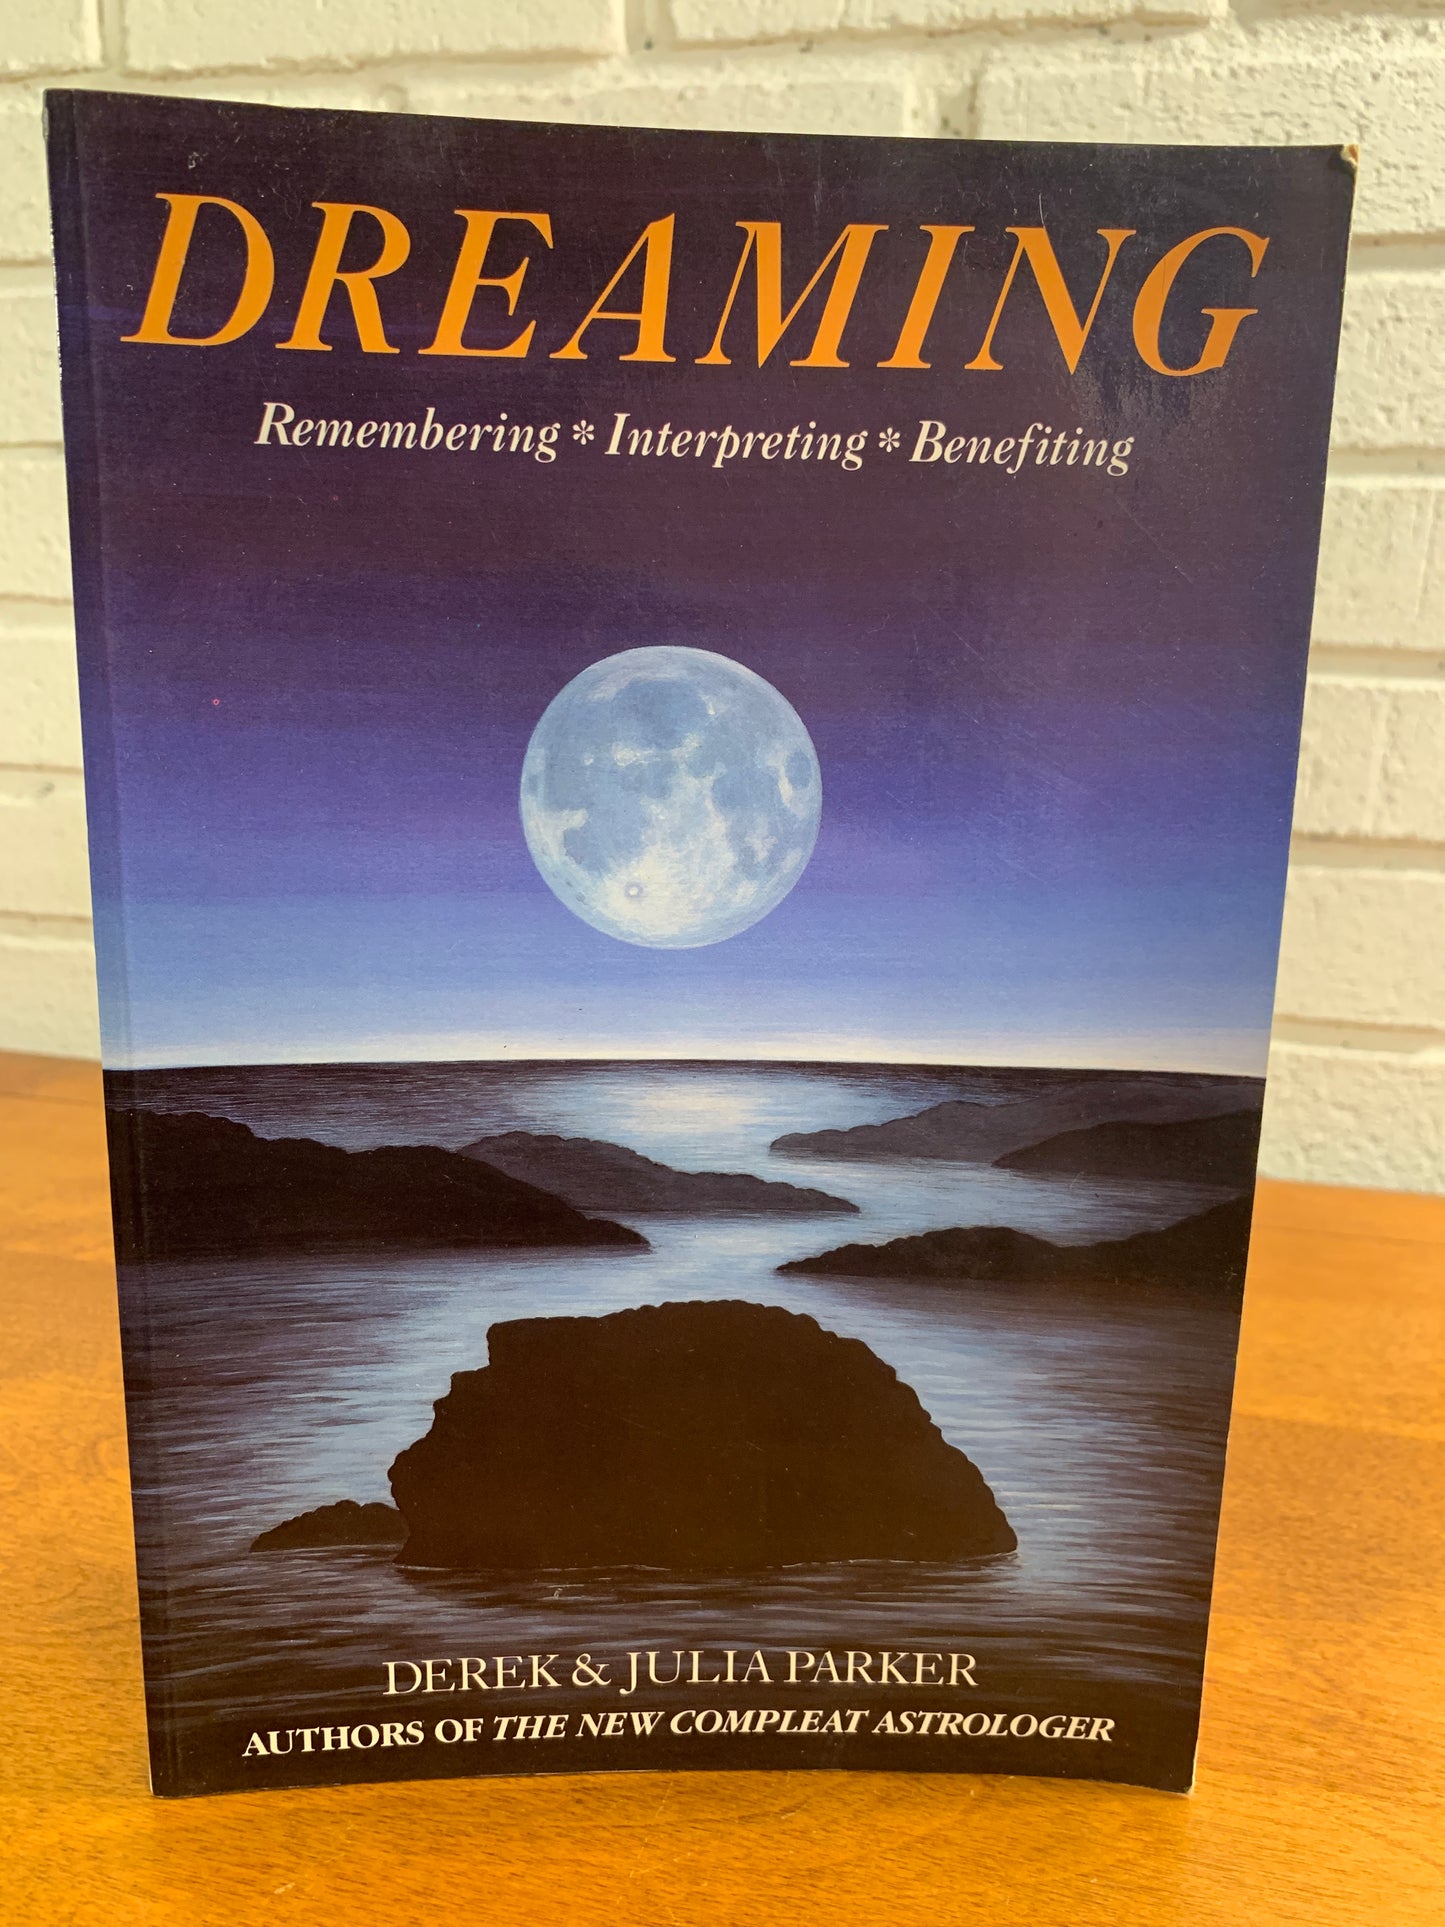 Dreaming: Remembering * Interpreting * Benefiting by Derek & Julia Parker